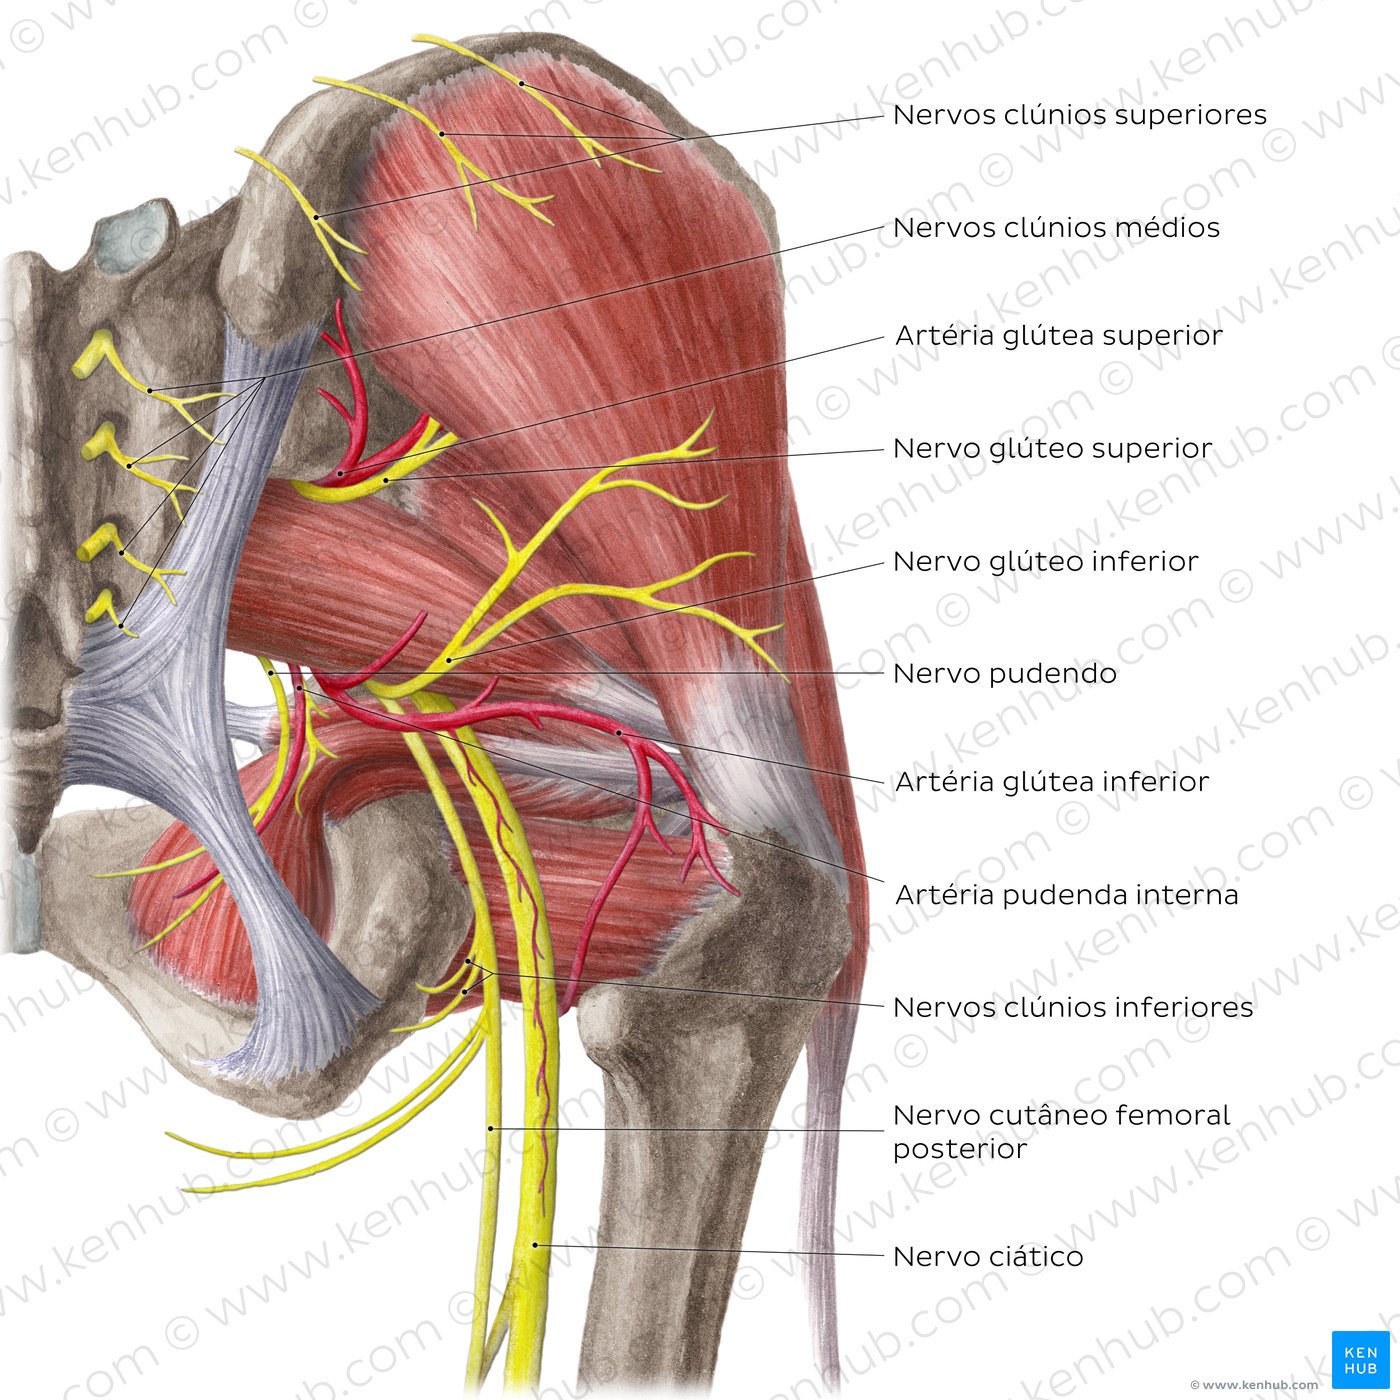 Anatomia aplicada da coxa- Músculos Quiz